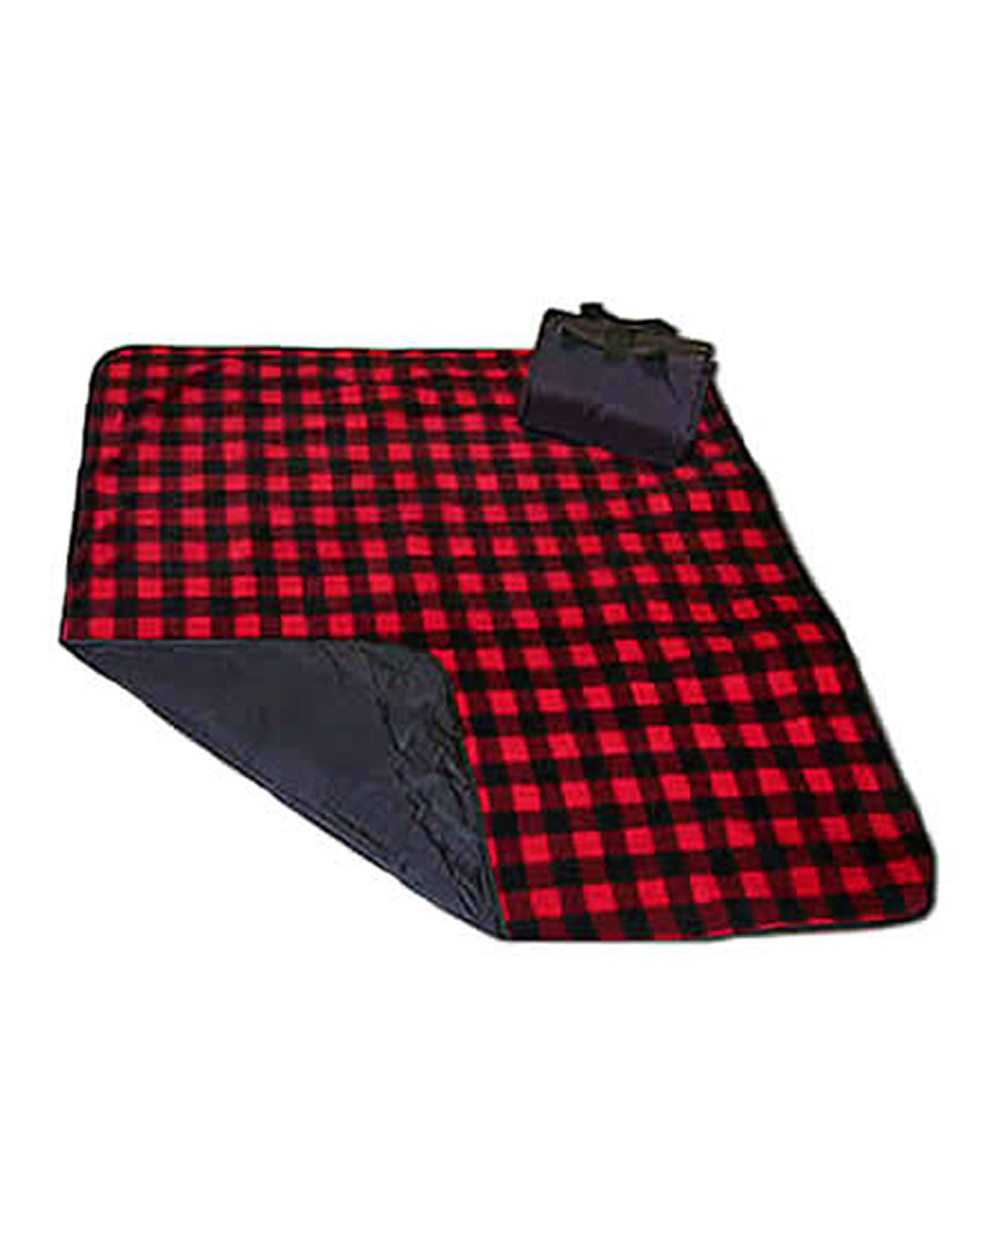 Alpine Fleece 8702 Polyester Nylon Patterned Picnic Blanket - Red Buffalo - HIT a Double